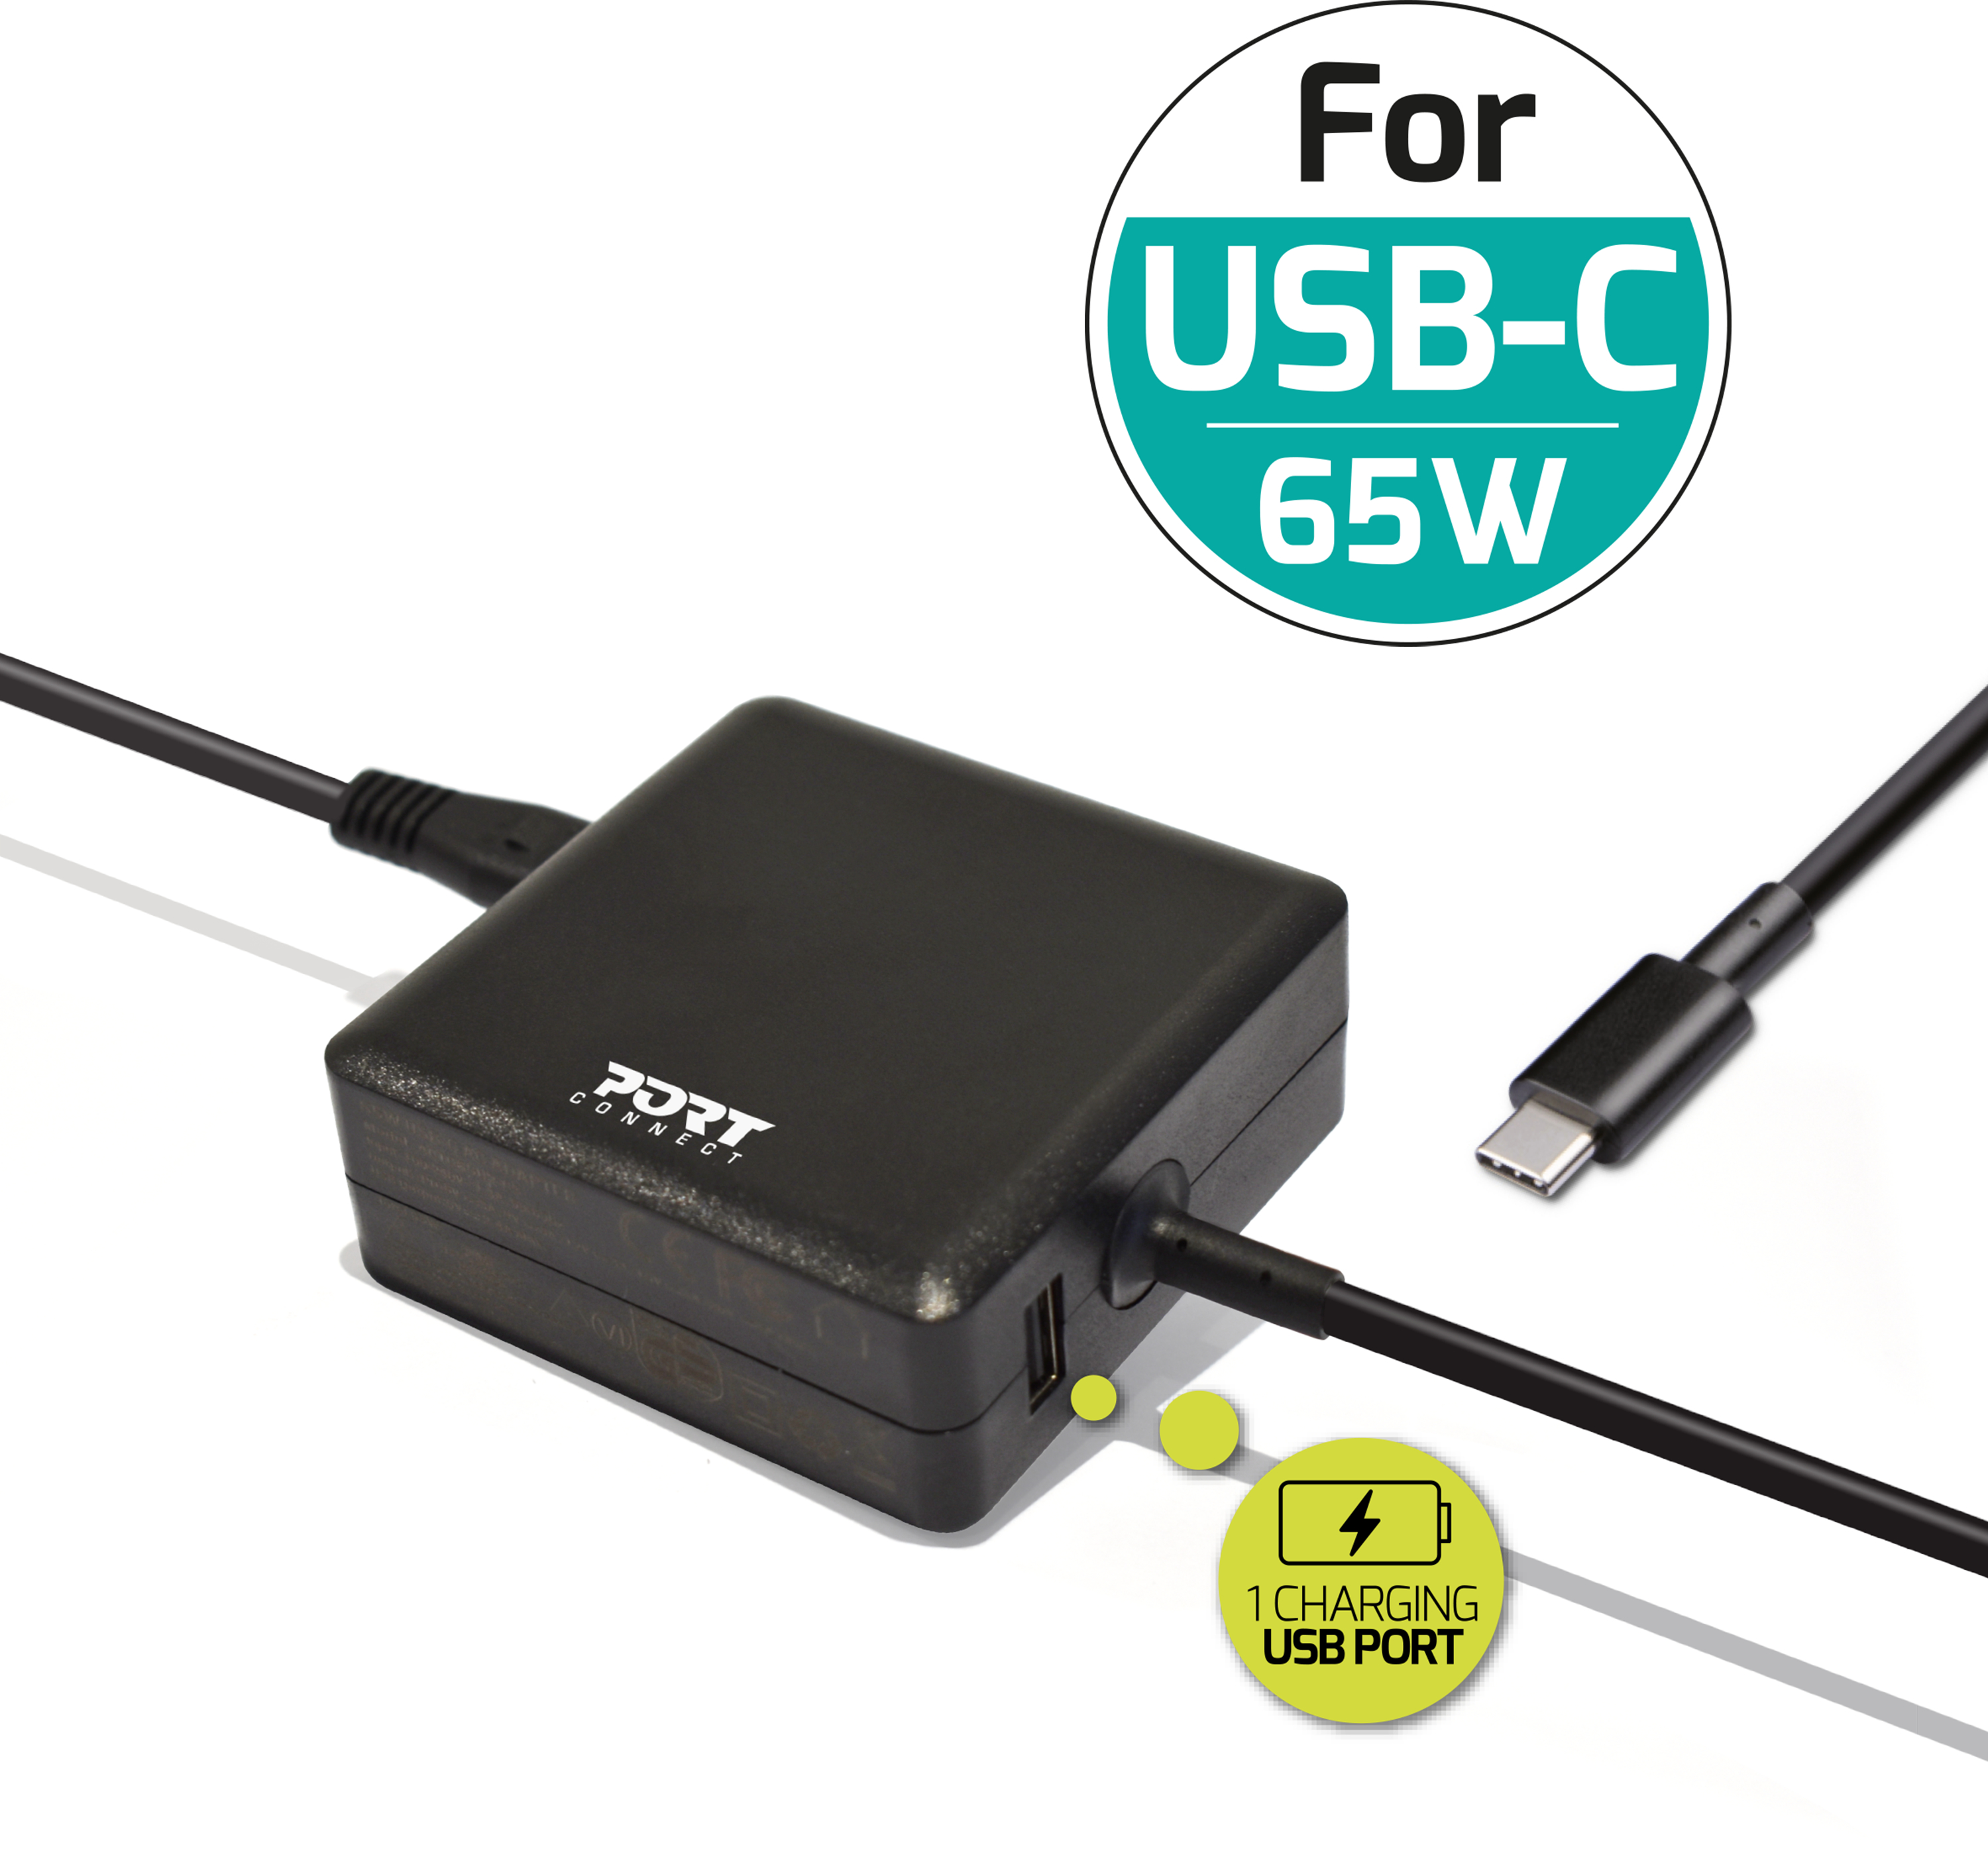 PORT PowerSupply 65W-Type-C EU 900097 black,& 1 charging USB Port